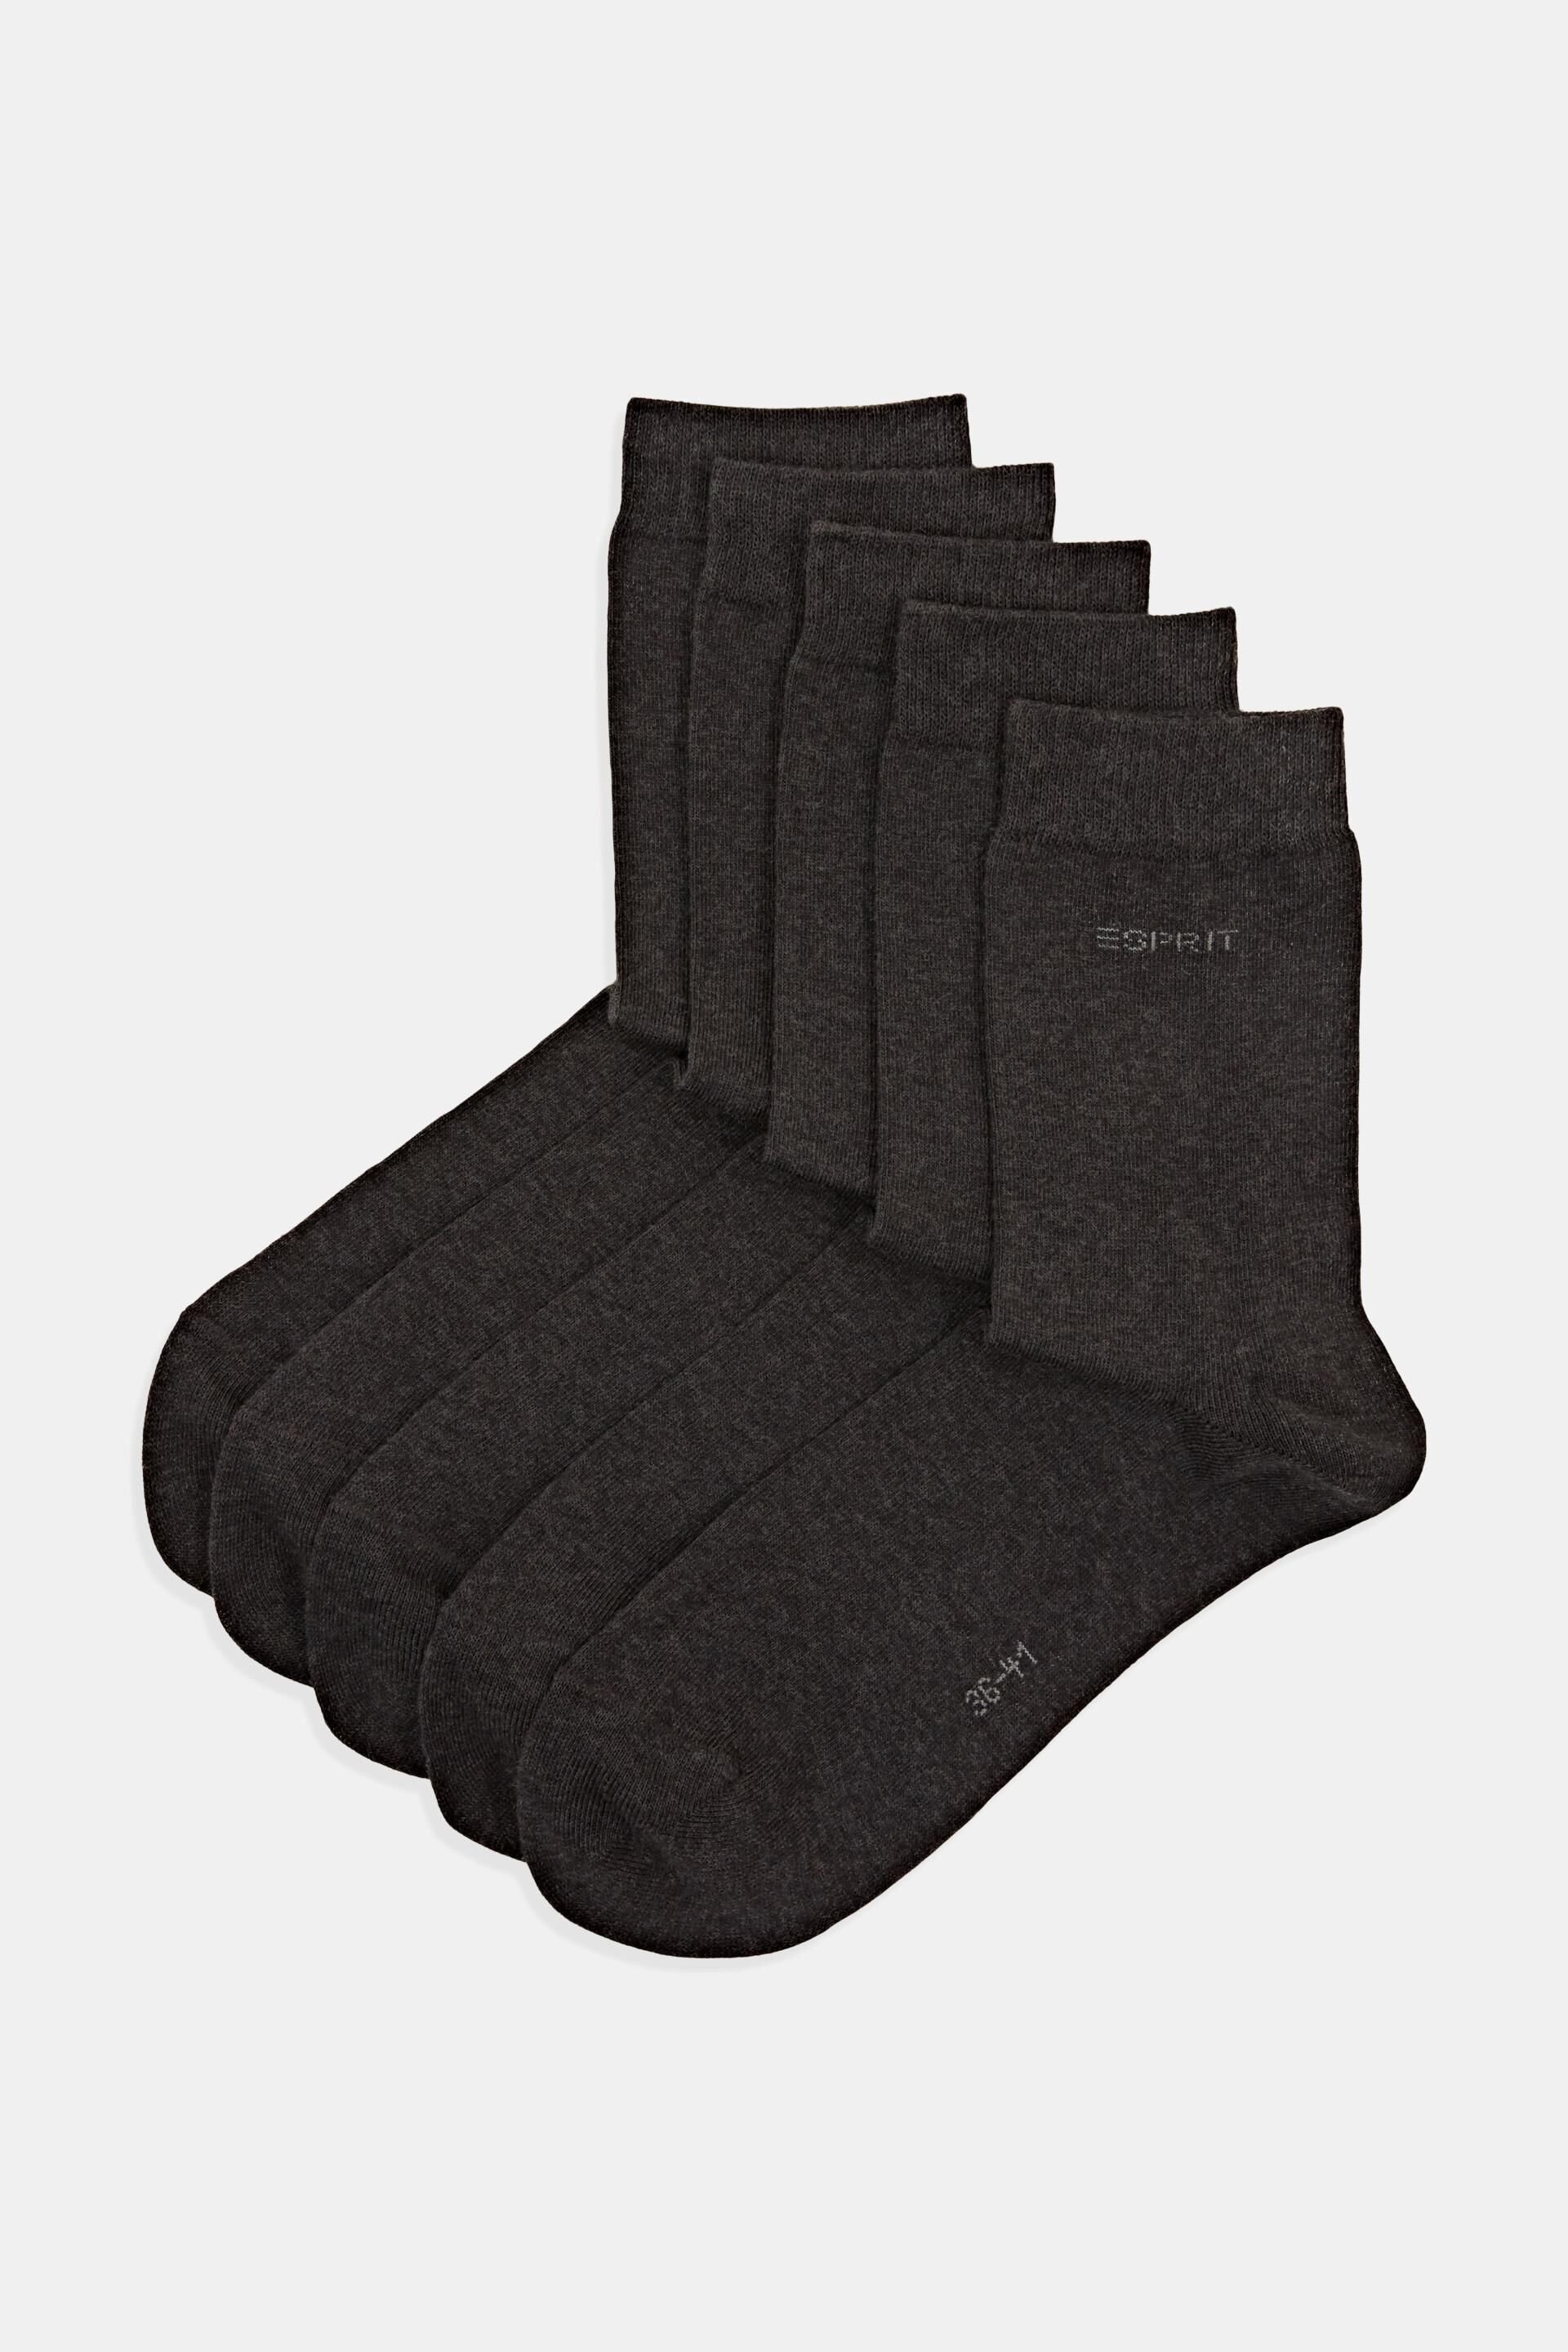 Esprit plain Pack socks, of organic cotton 5